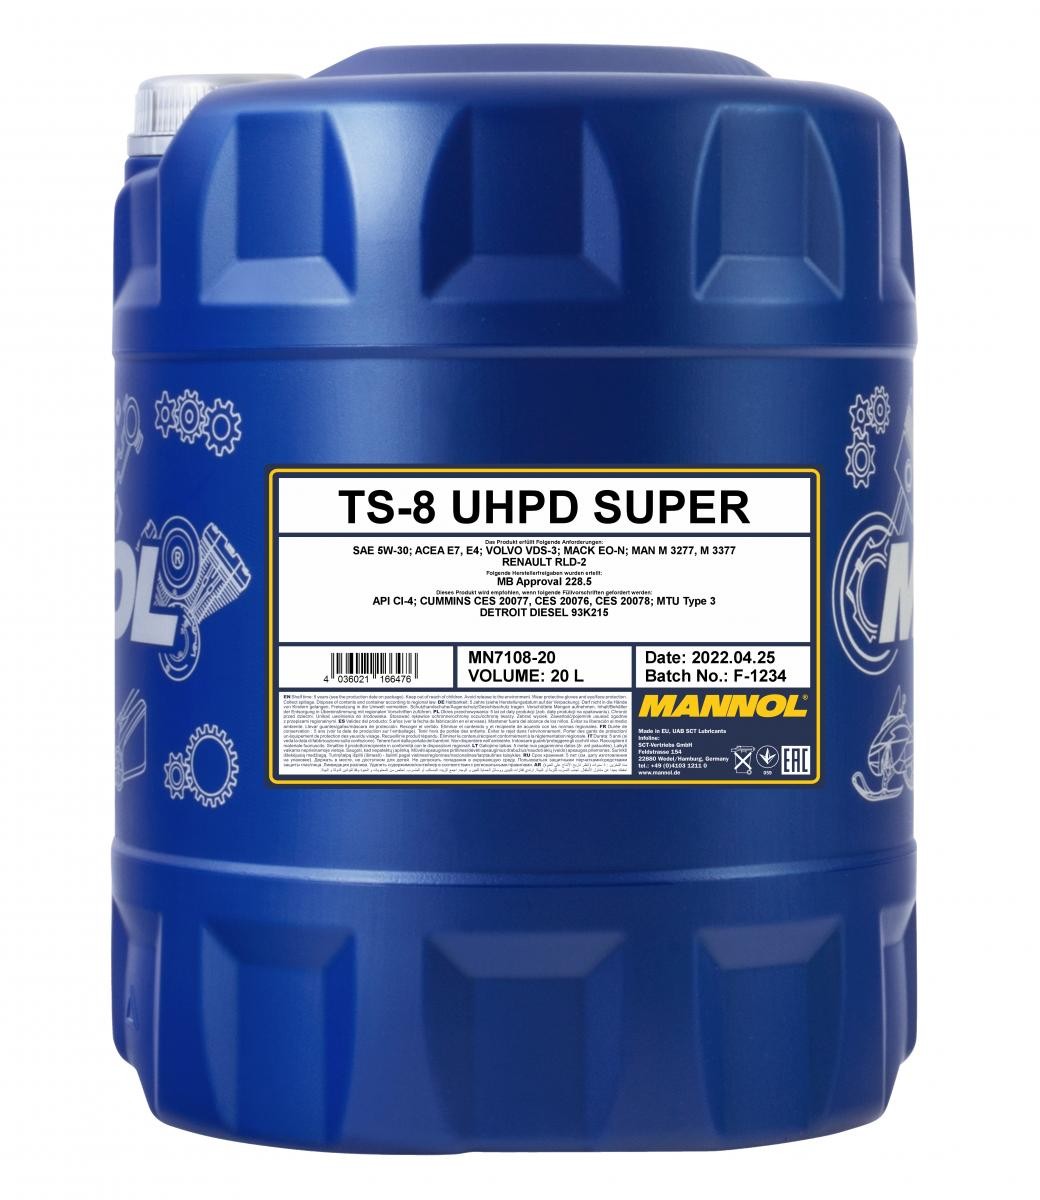 Motor oil 5W 30 longlife petrol - MN7108-20 MANNOL TS-8, UHPD Super